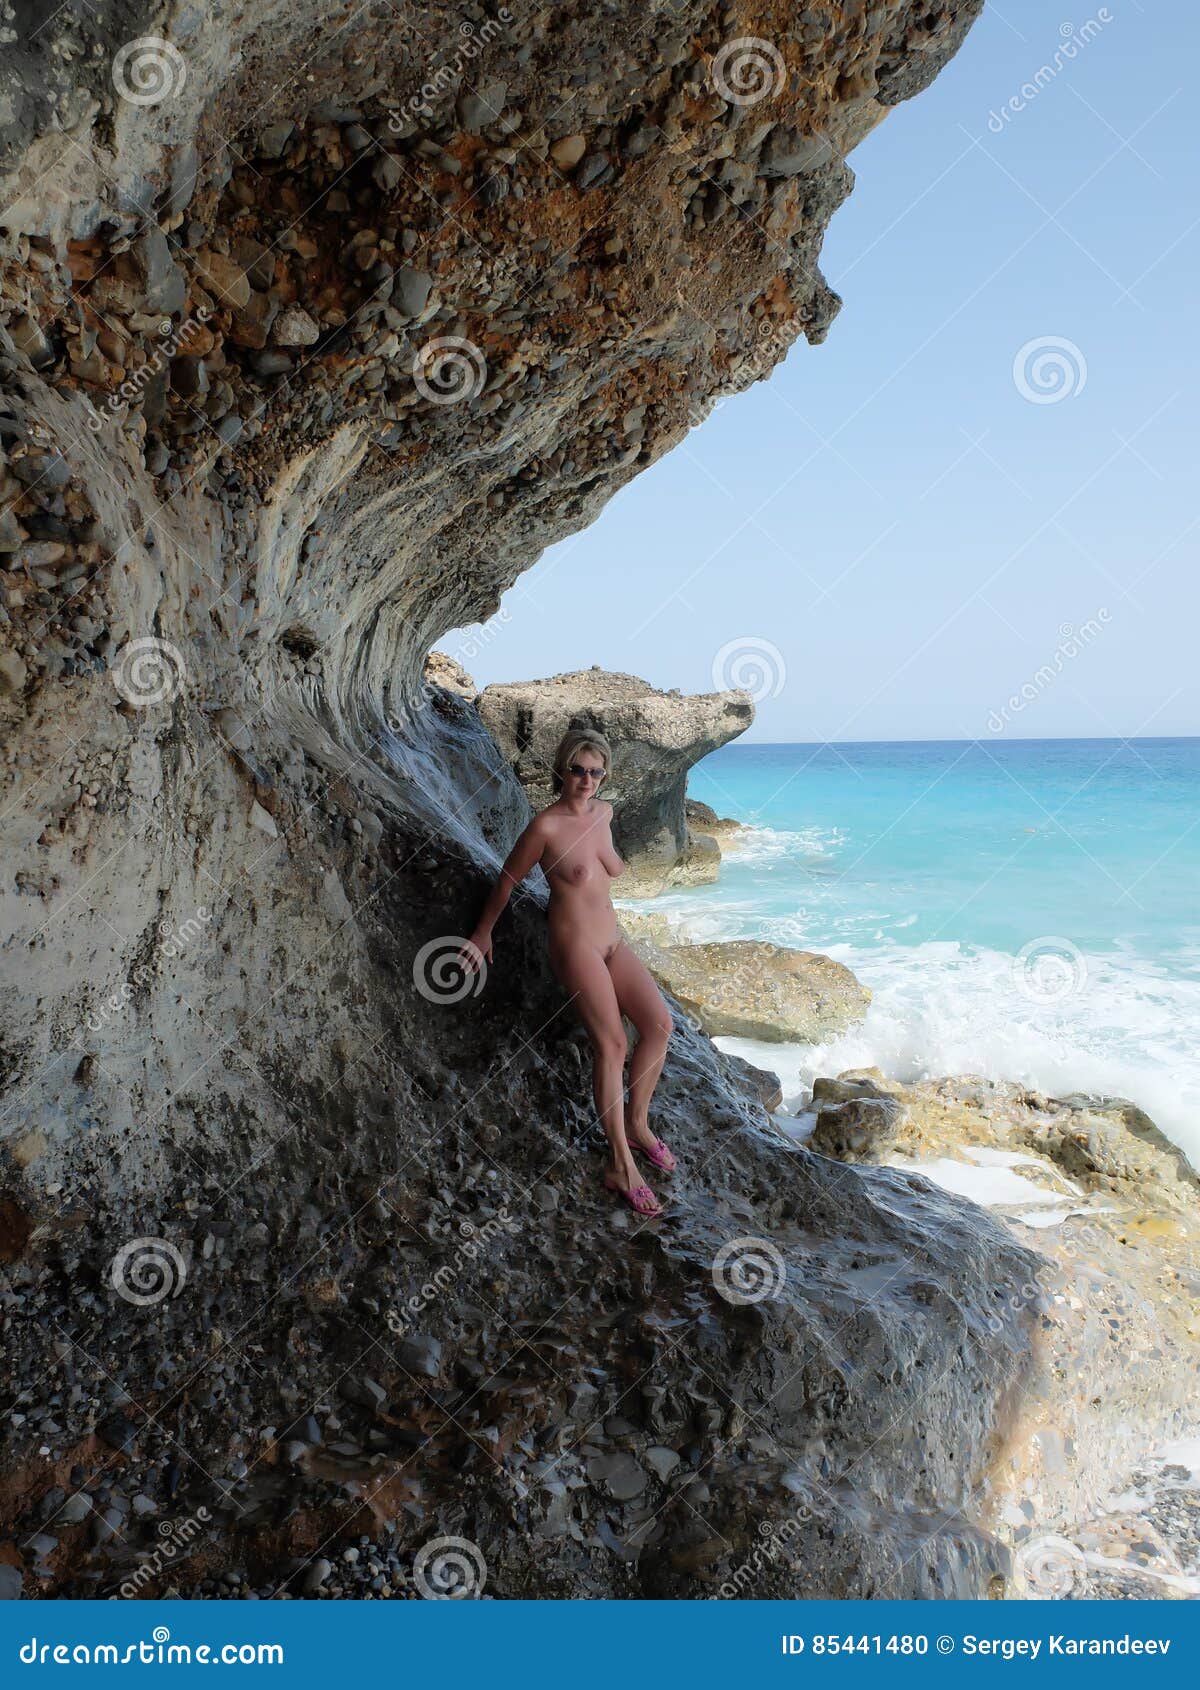 Nude women on the beach pics